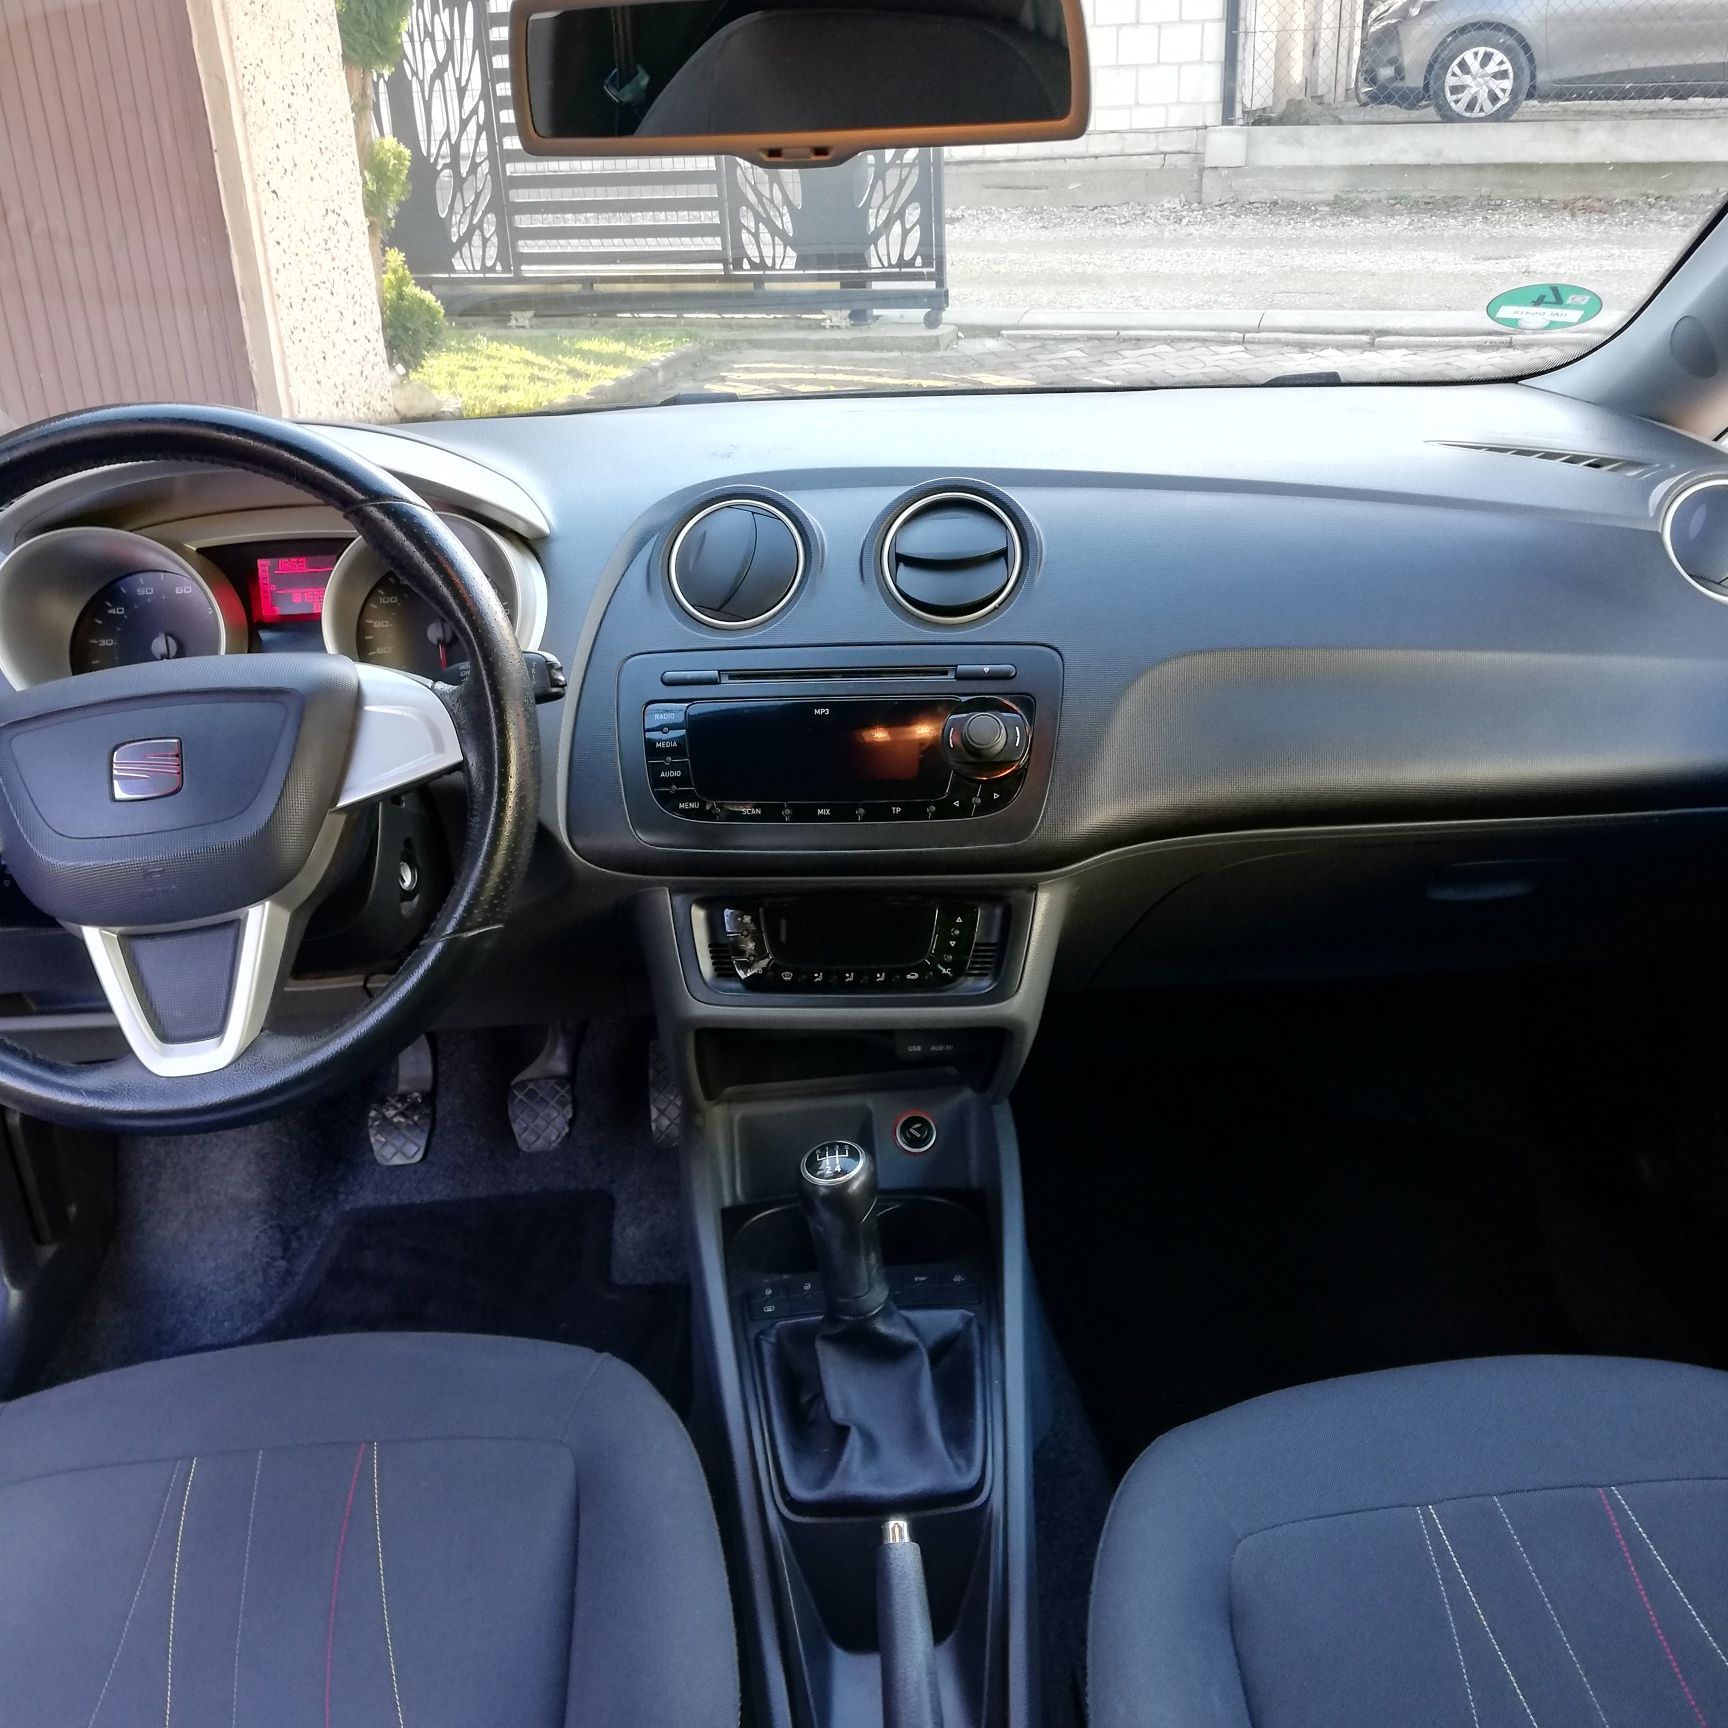 Seat Ibiza 1.2 benzyna serwisowany